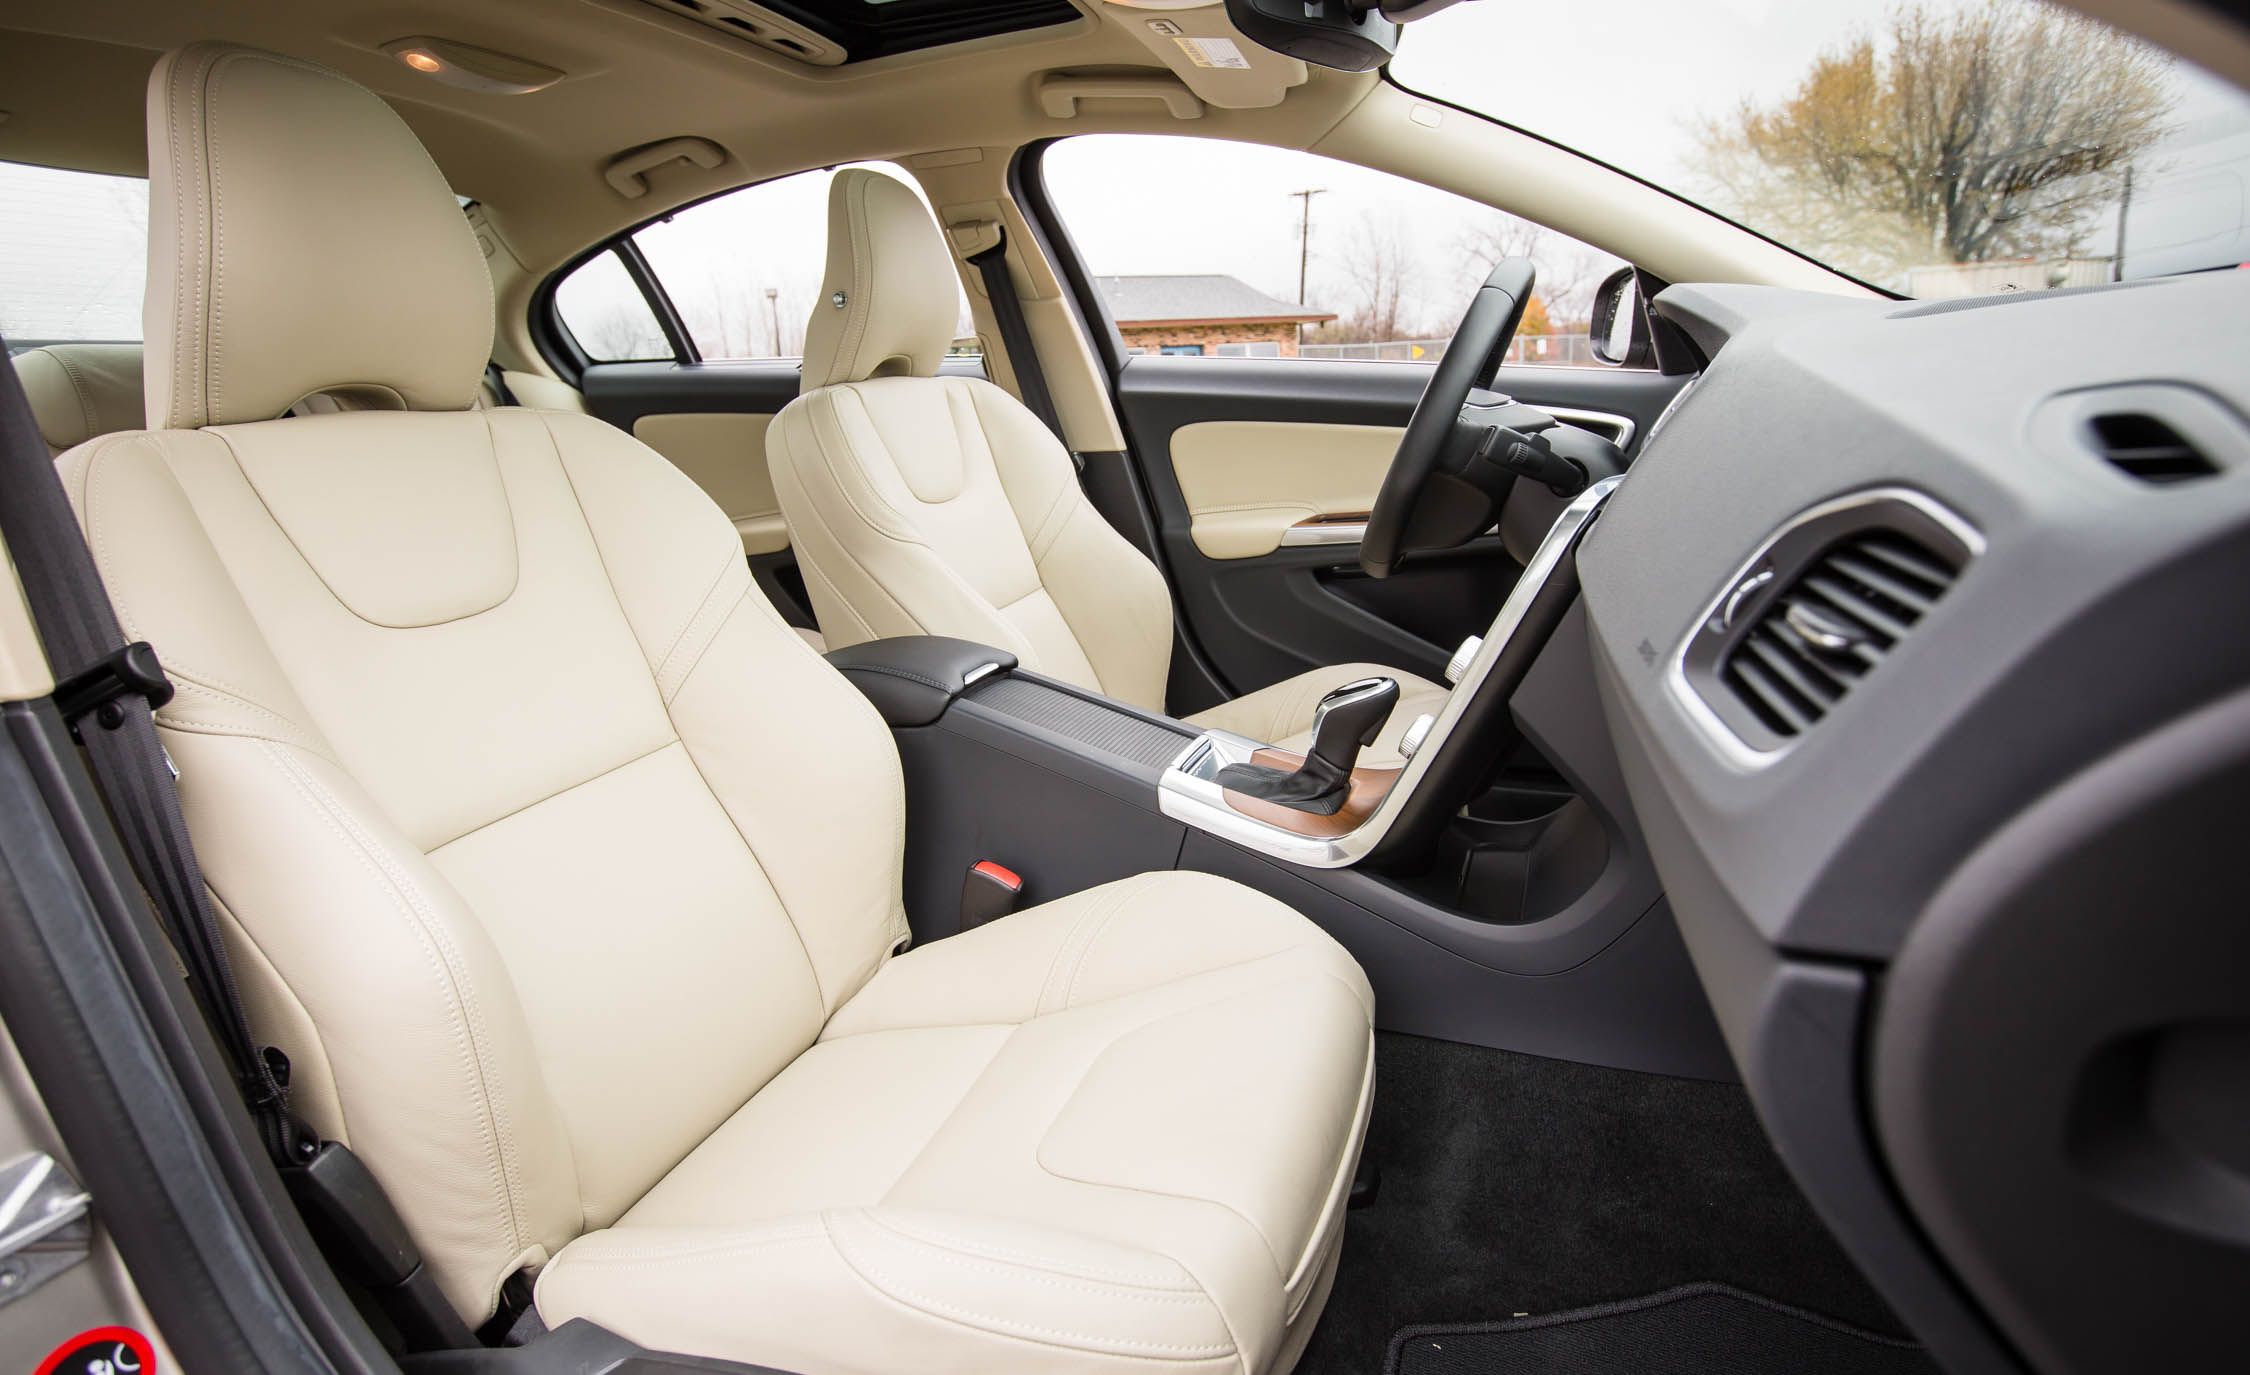 2016 Volvo S60 T5 Inscription Interior Passenger Seats Front (View 1 of 28)